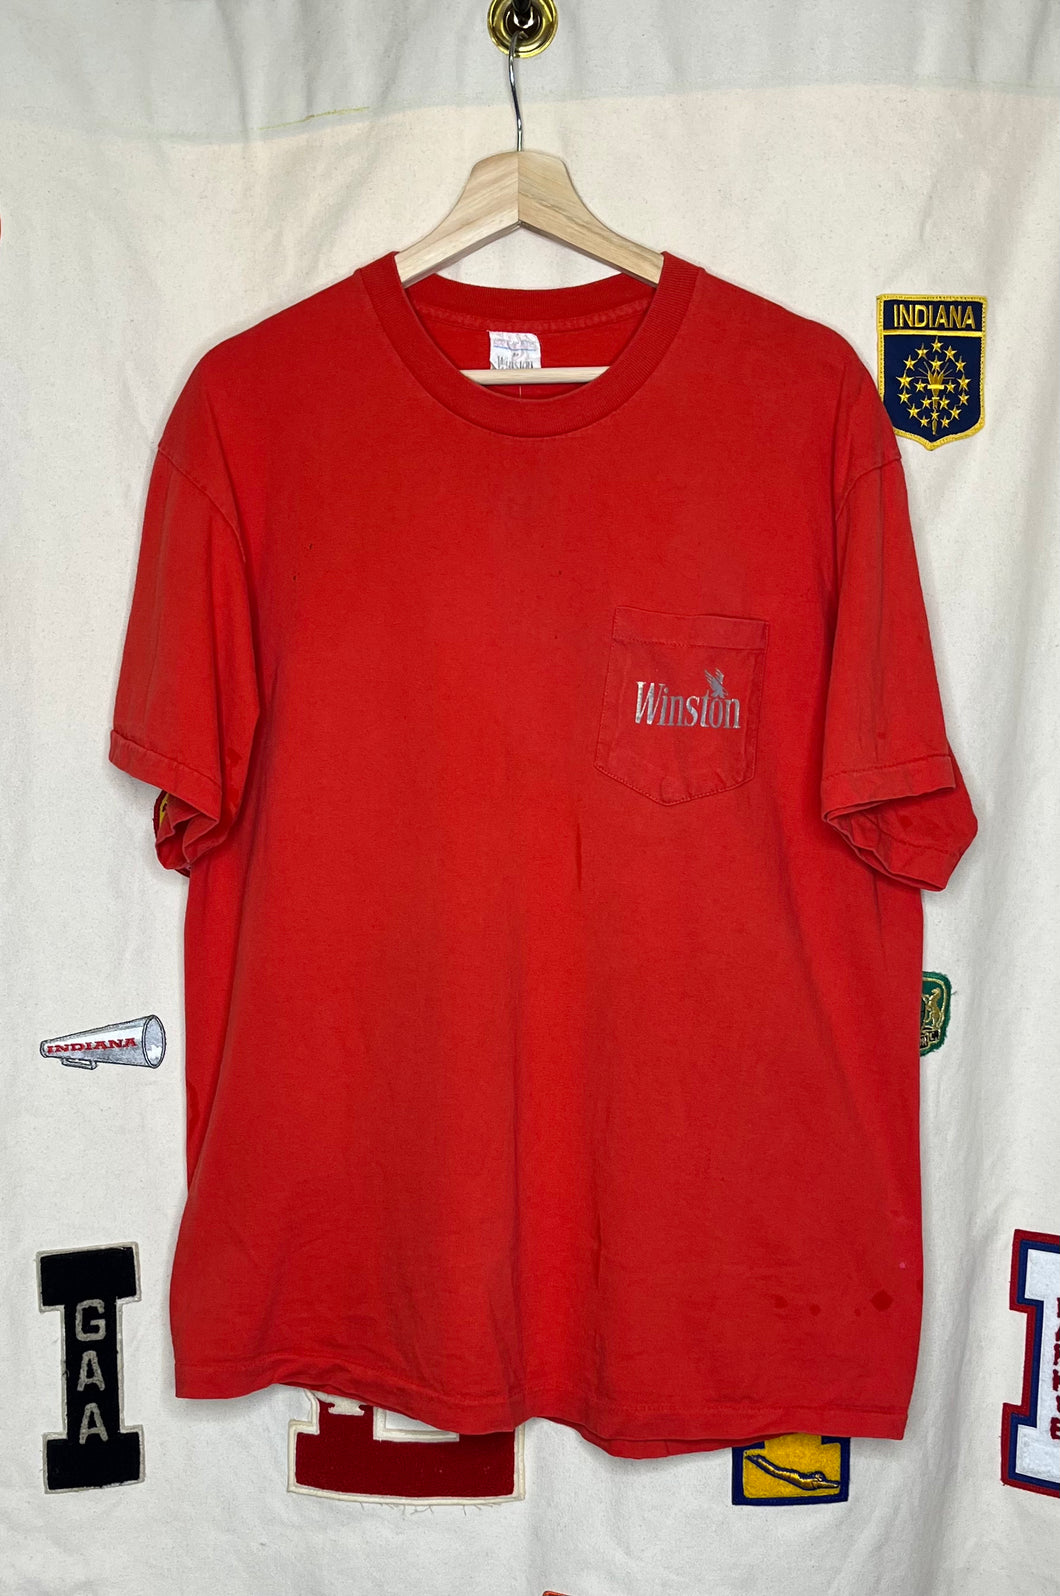 Winston Tobacco Eagle Red T-Shirt: XL